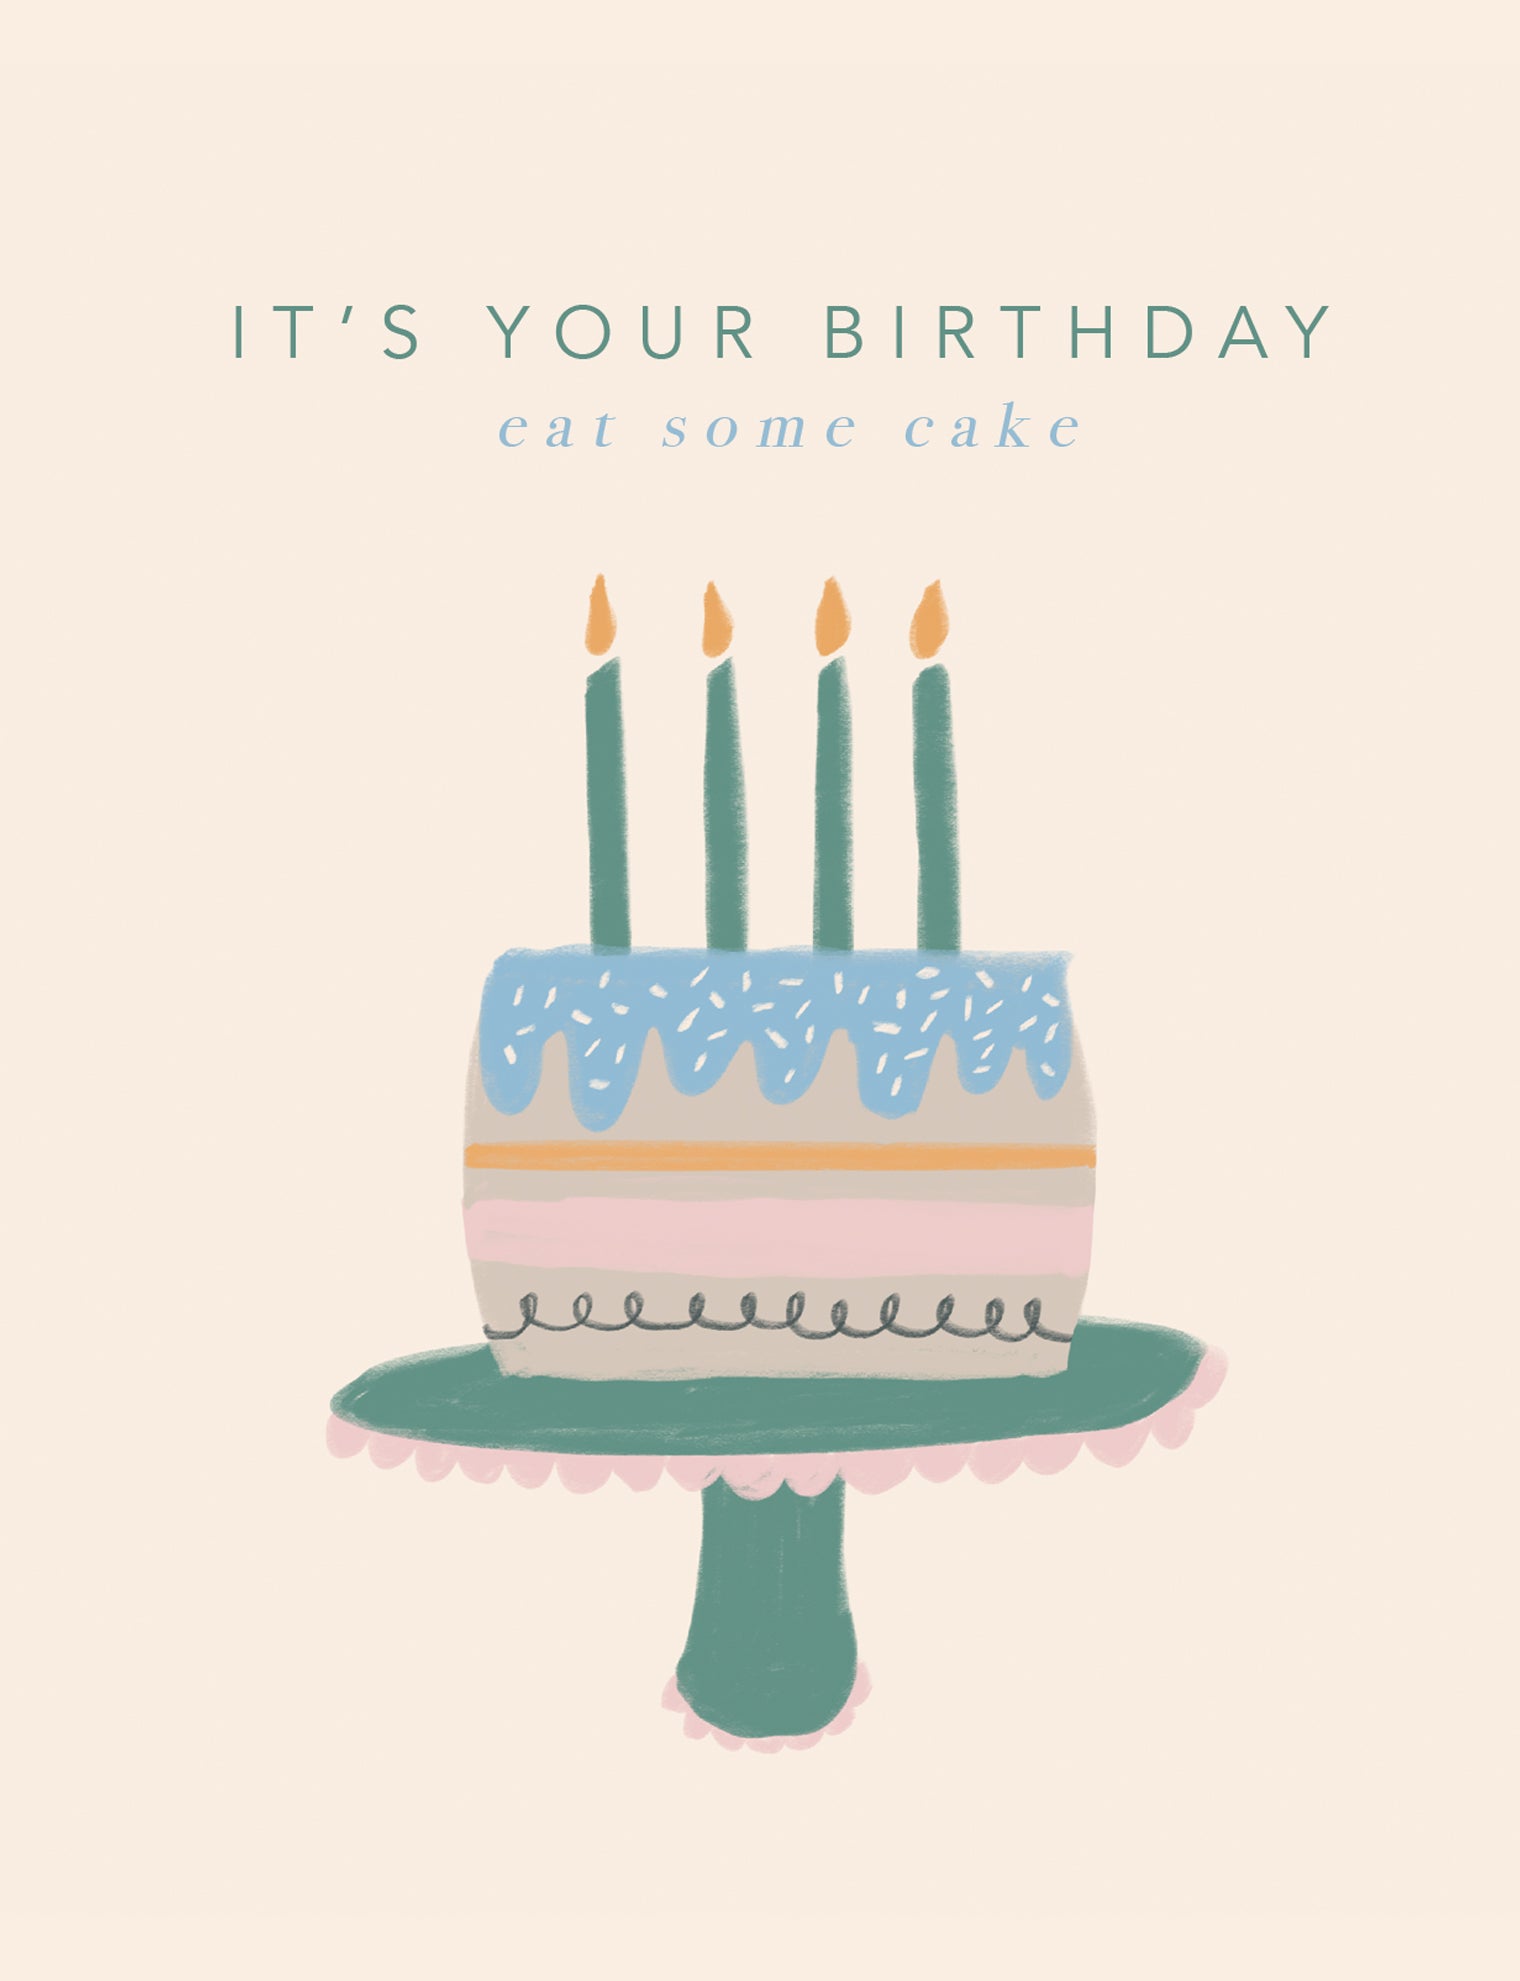 Shining Birthday Cake Card for Friends | Birthday & Greeting Cards by Davia  | Happy birthday friend cake, Birthday cake card, Happy birthday friend